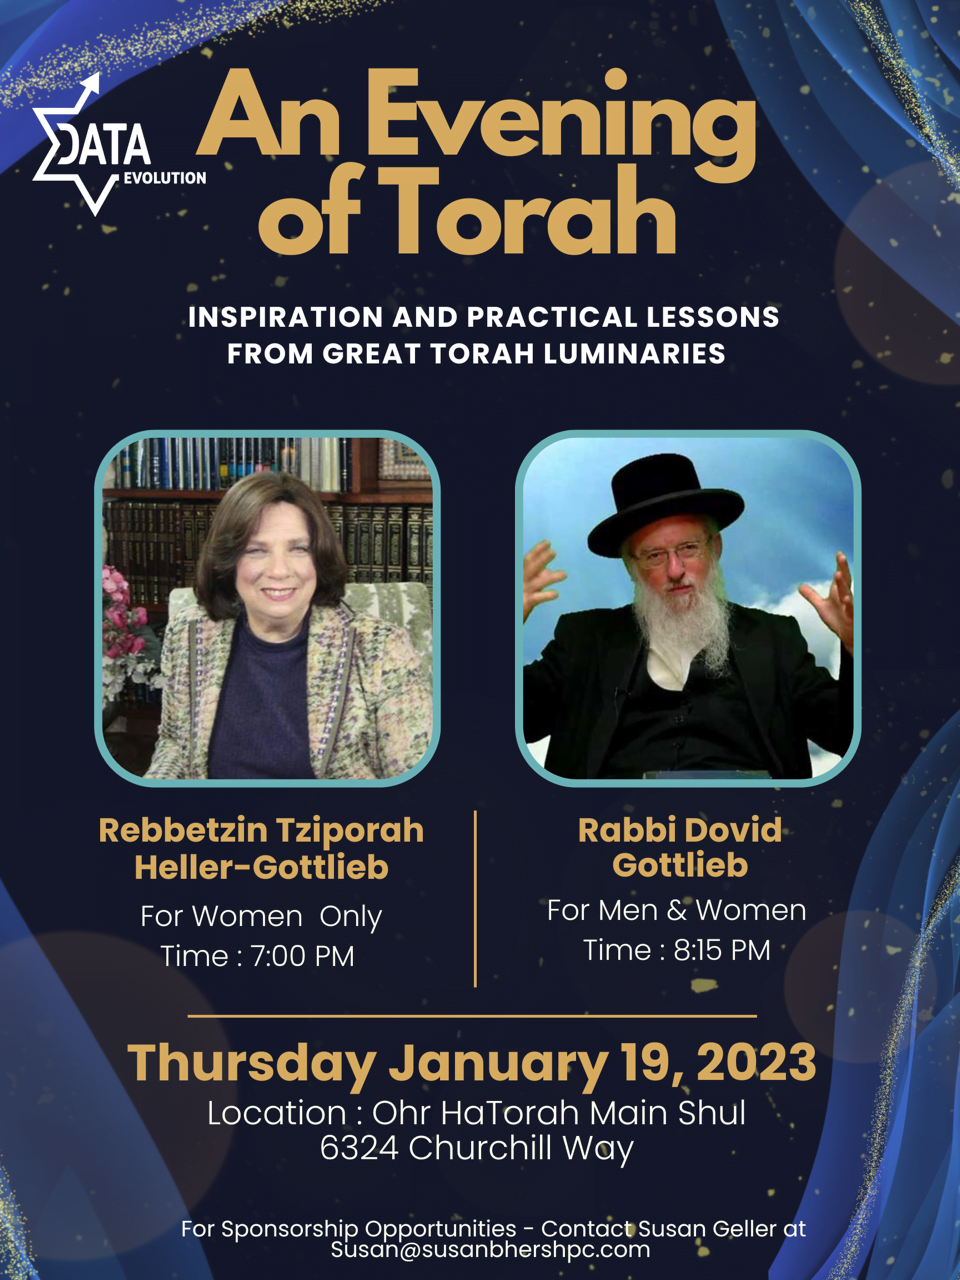 DATA: An Evening of Torah - Inspiration and Practical Lessons from Great Torah Luminaries 1